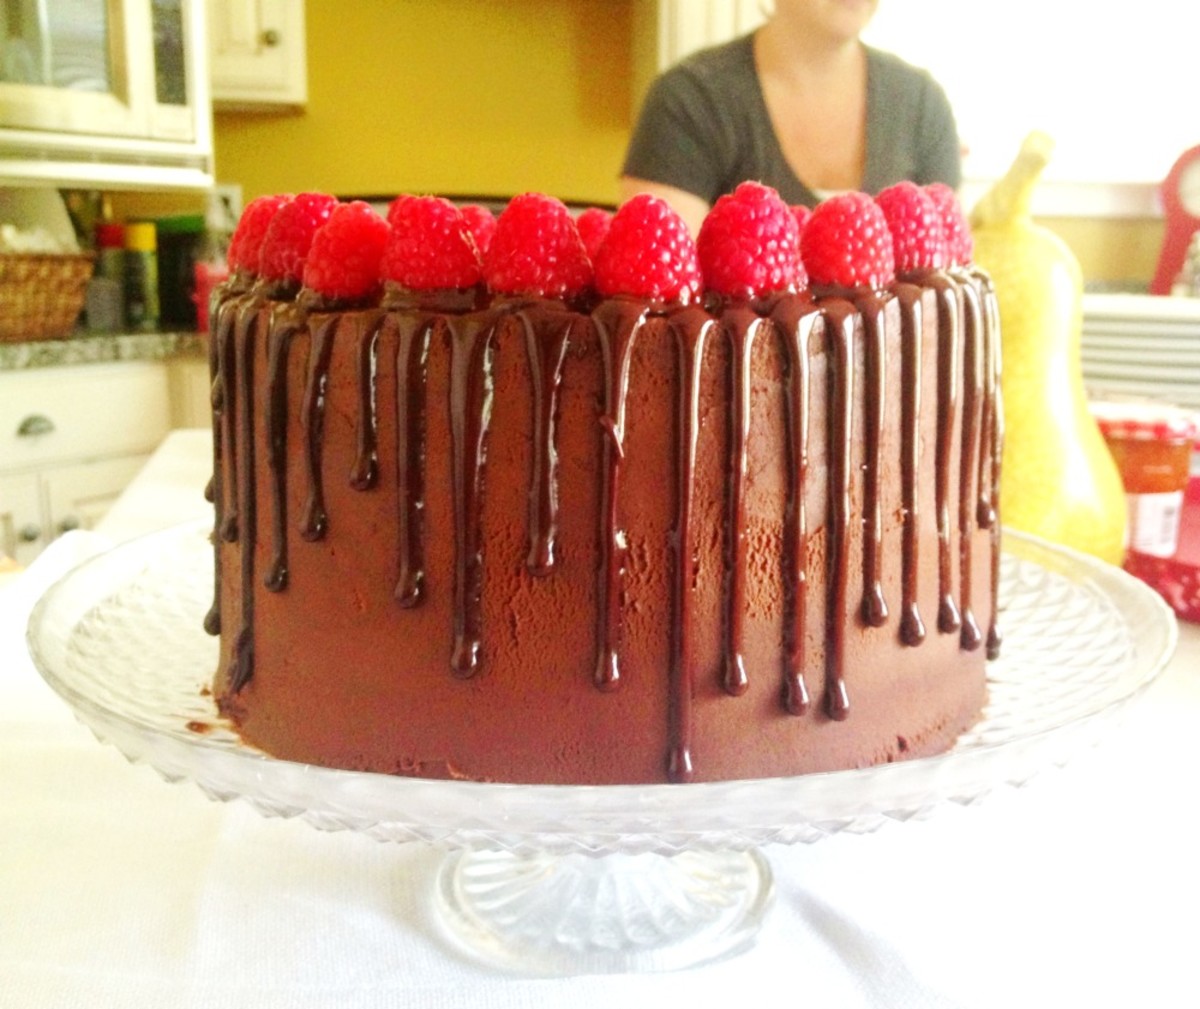 chocolate raspberry cake decorated